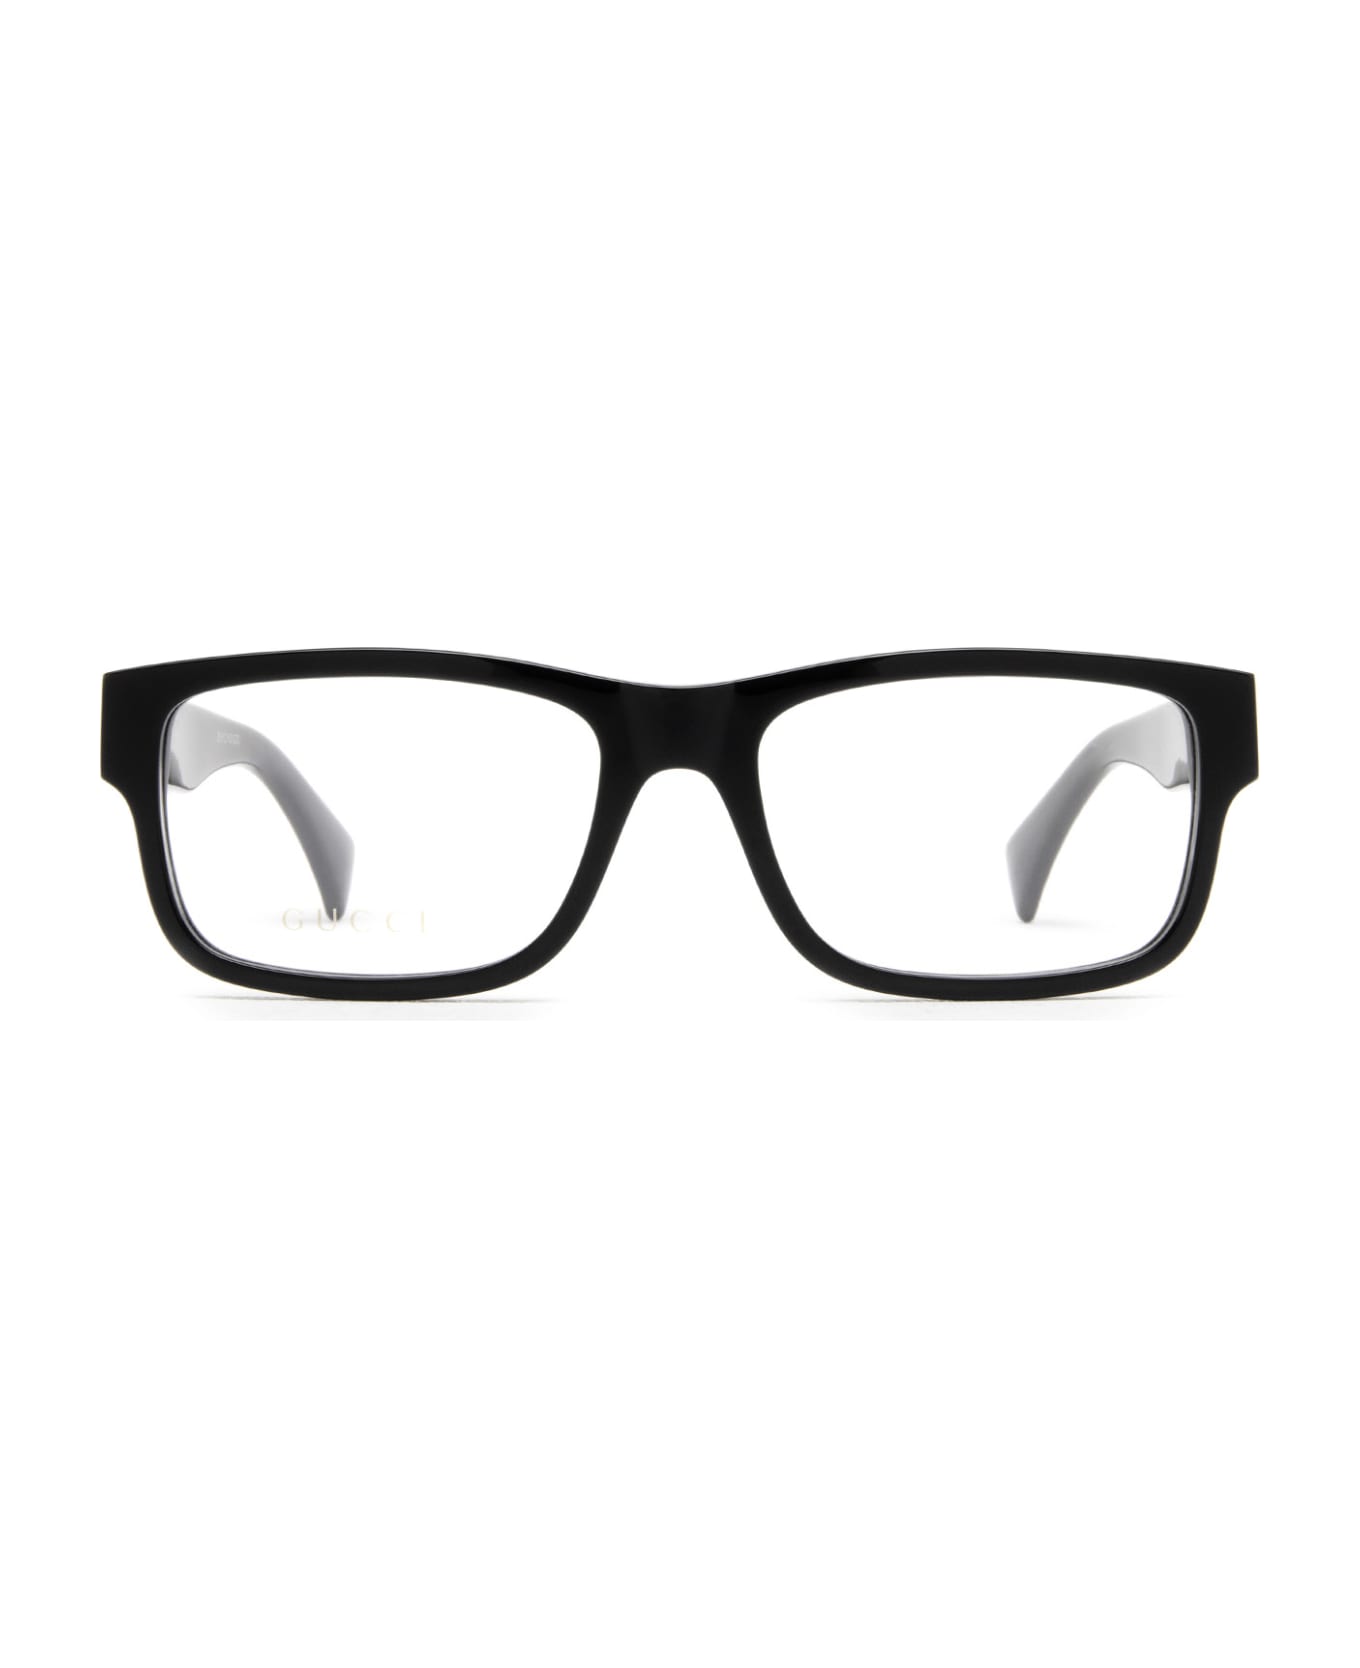 Gucci Eyewear Gg1141o Black Glasses - Black